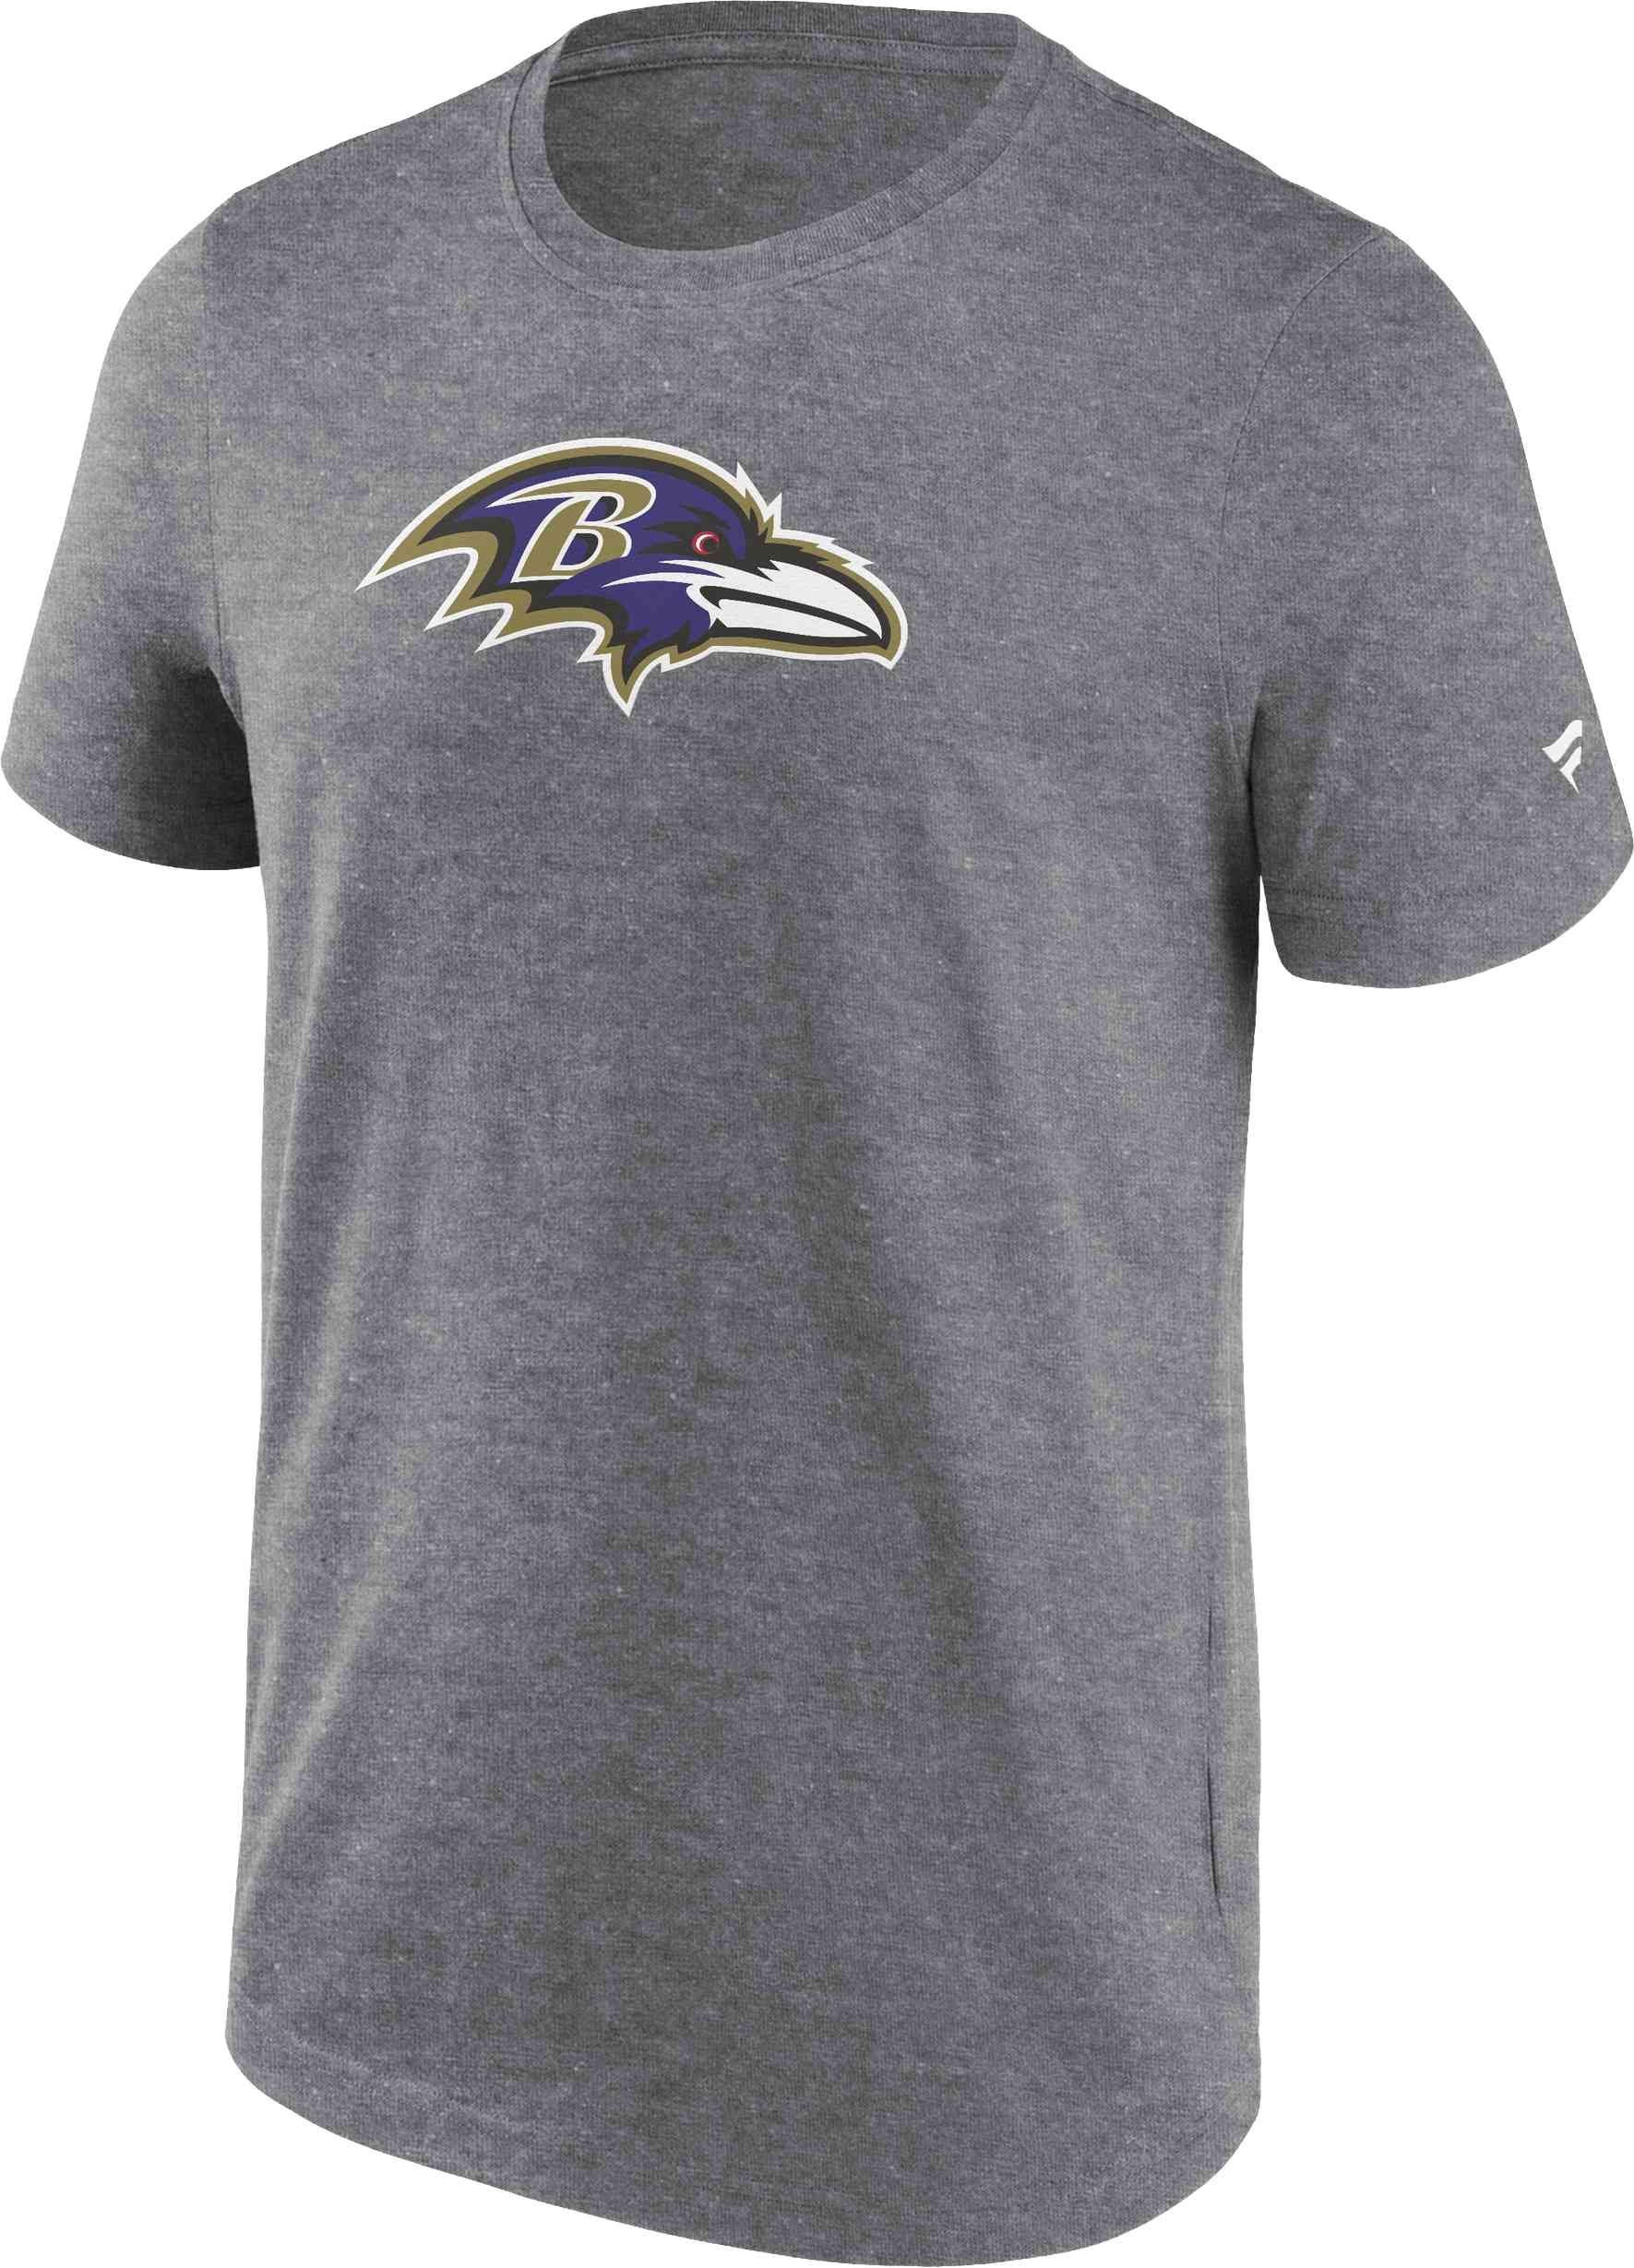 NFL Fanatics Primary Ravens T-Shirt Logo Baltimore Graphic